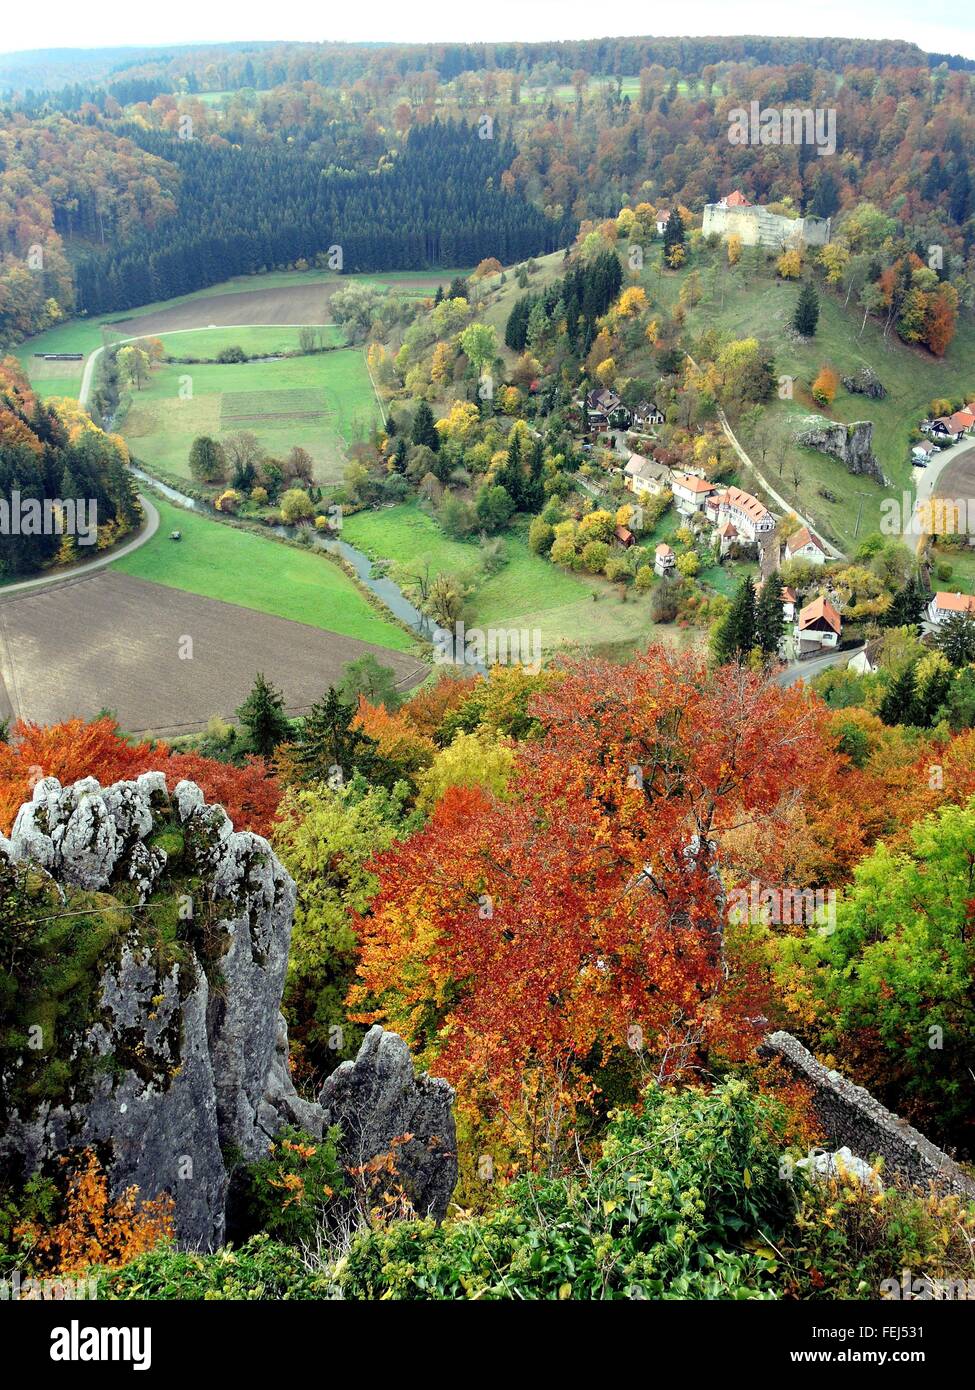 Vista dal castello Hohengundelfingen vicino Münsingen-Gundelfingen (Germania) nella valle "Großes Lautertal' sul Swabian Alb. La valle ist parte della riserva della biosfera 'Swabian Alb". Foto: 11 ottobre 2015. Foto Stock